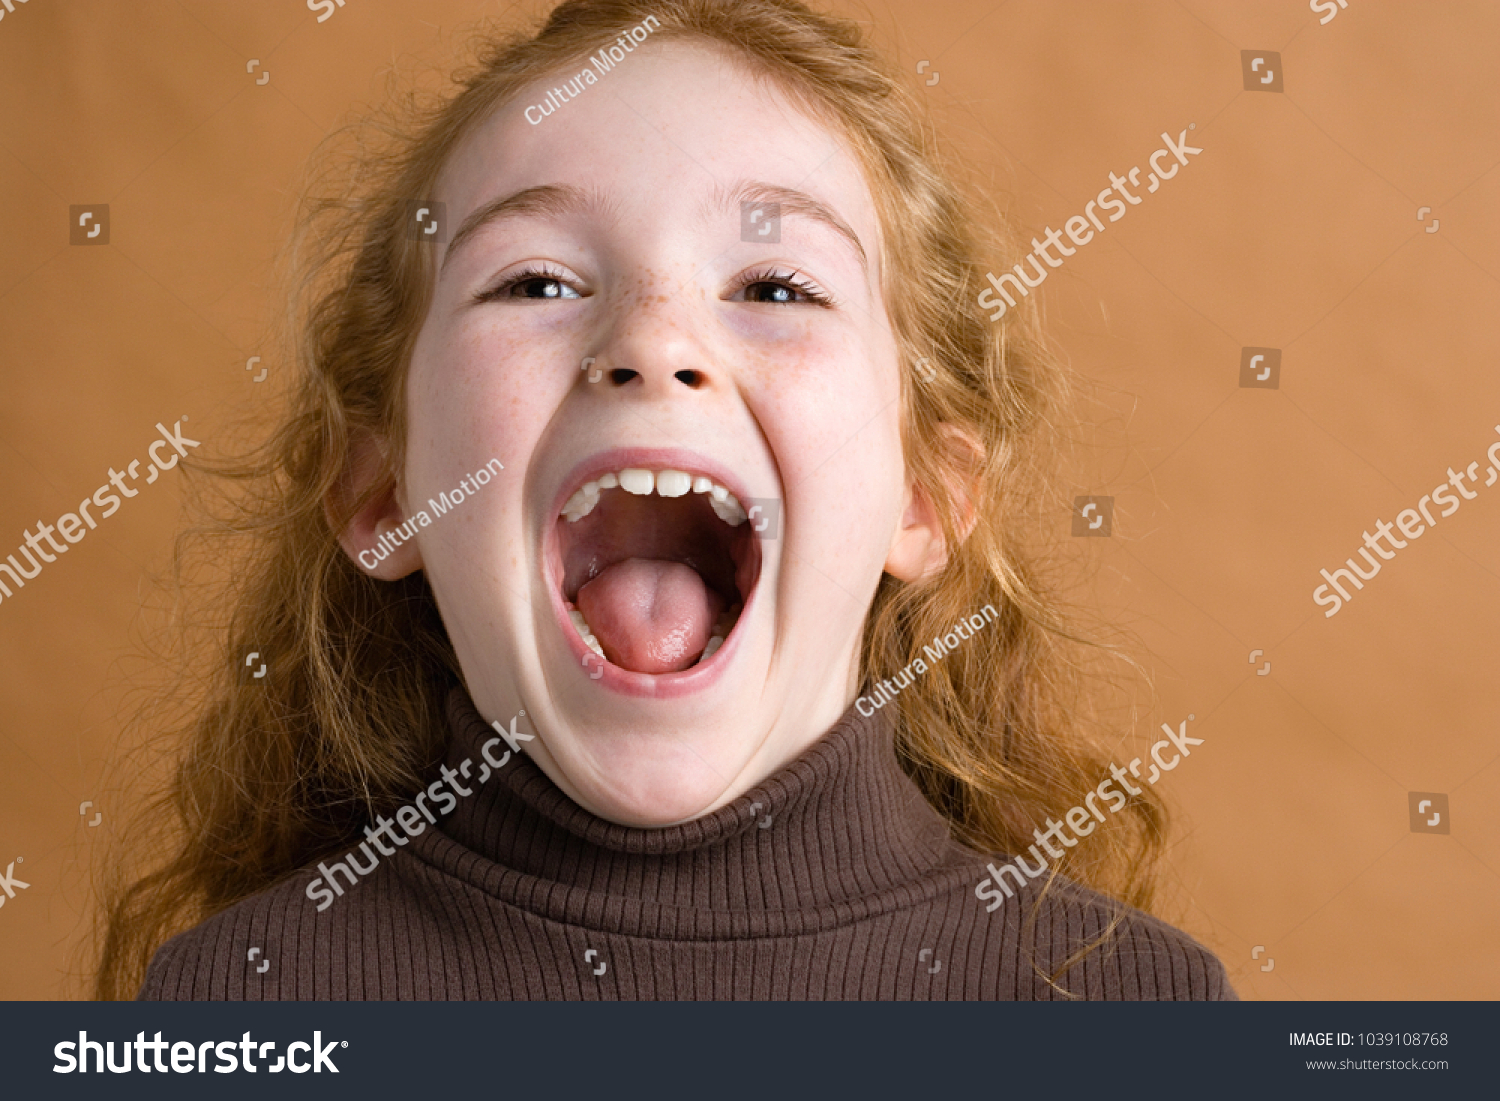 Image Girl Shouting Stock Photo 1039108768 | Shutterstock